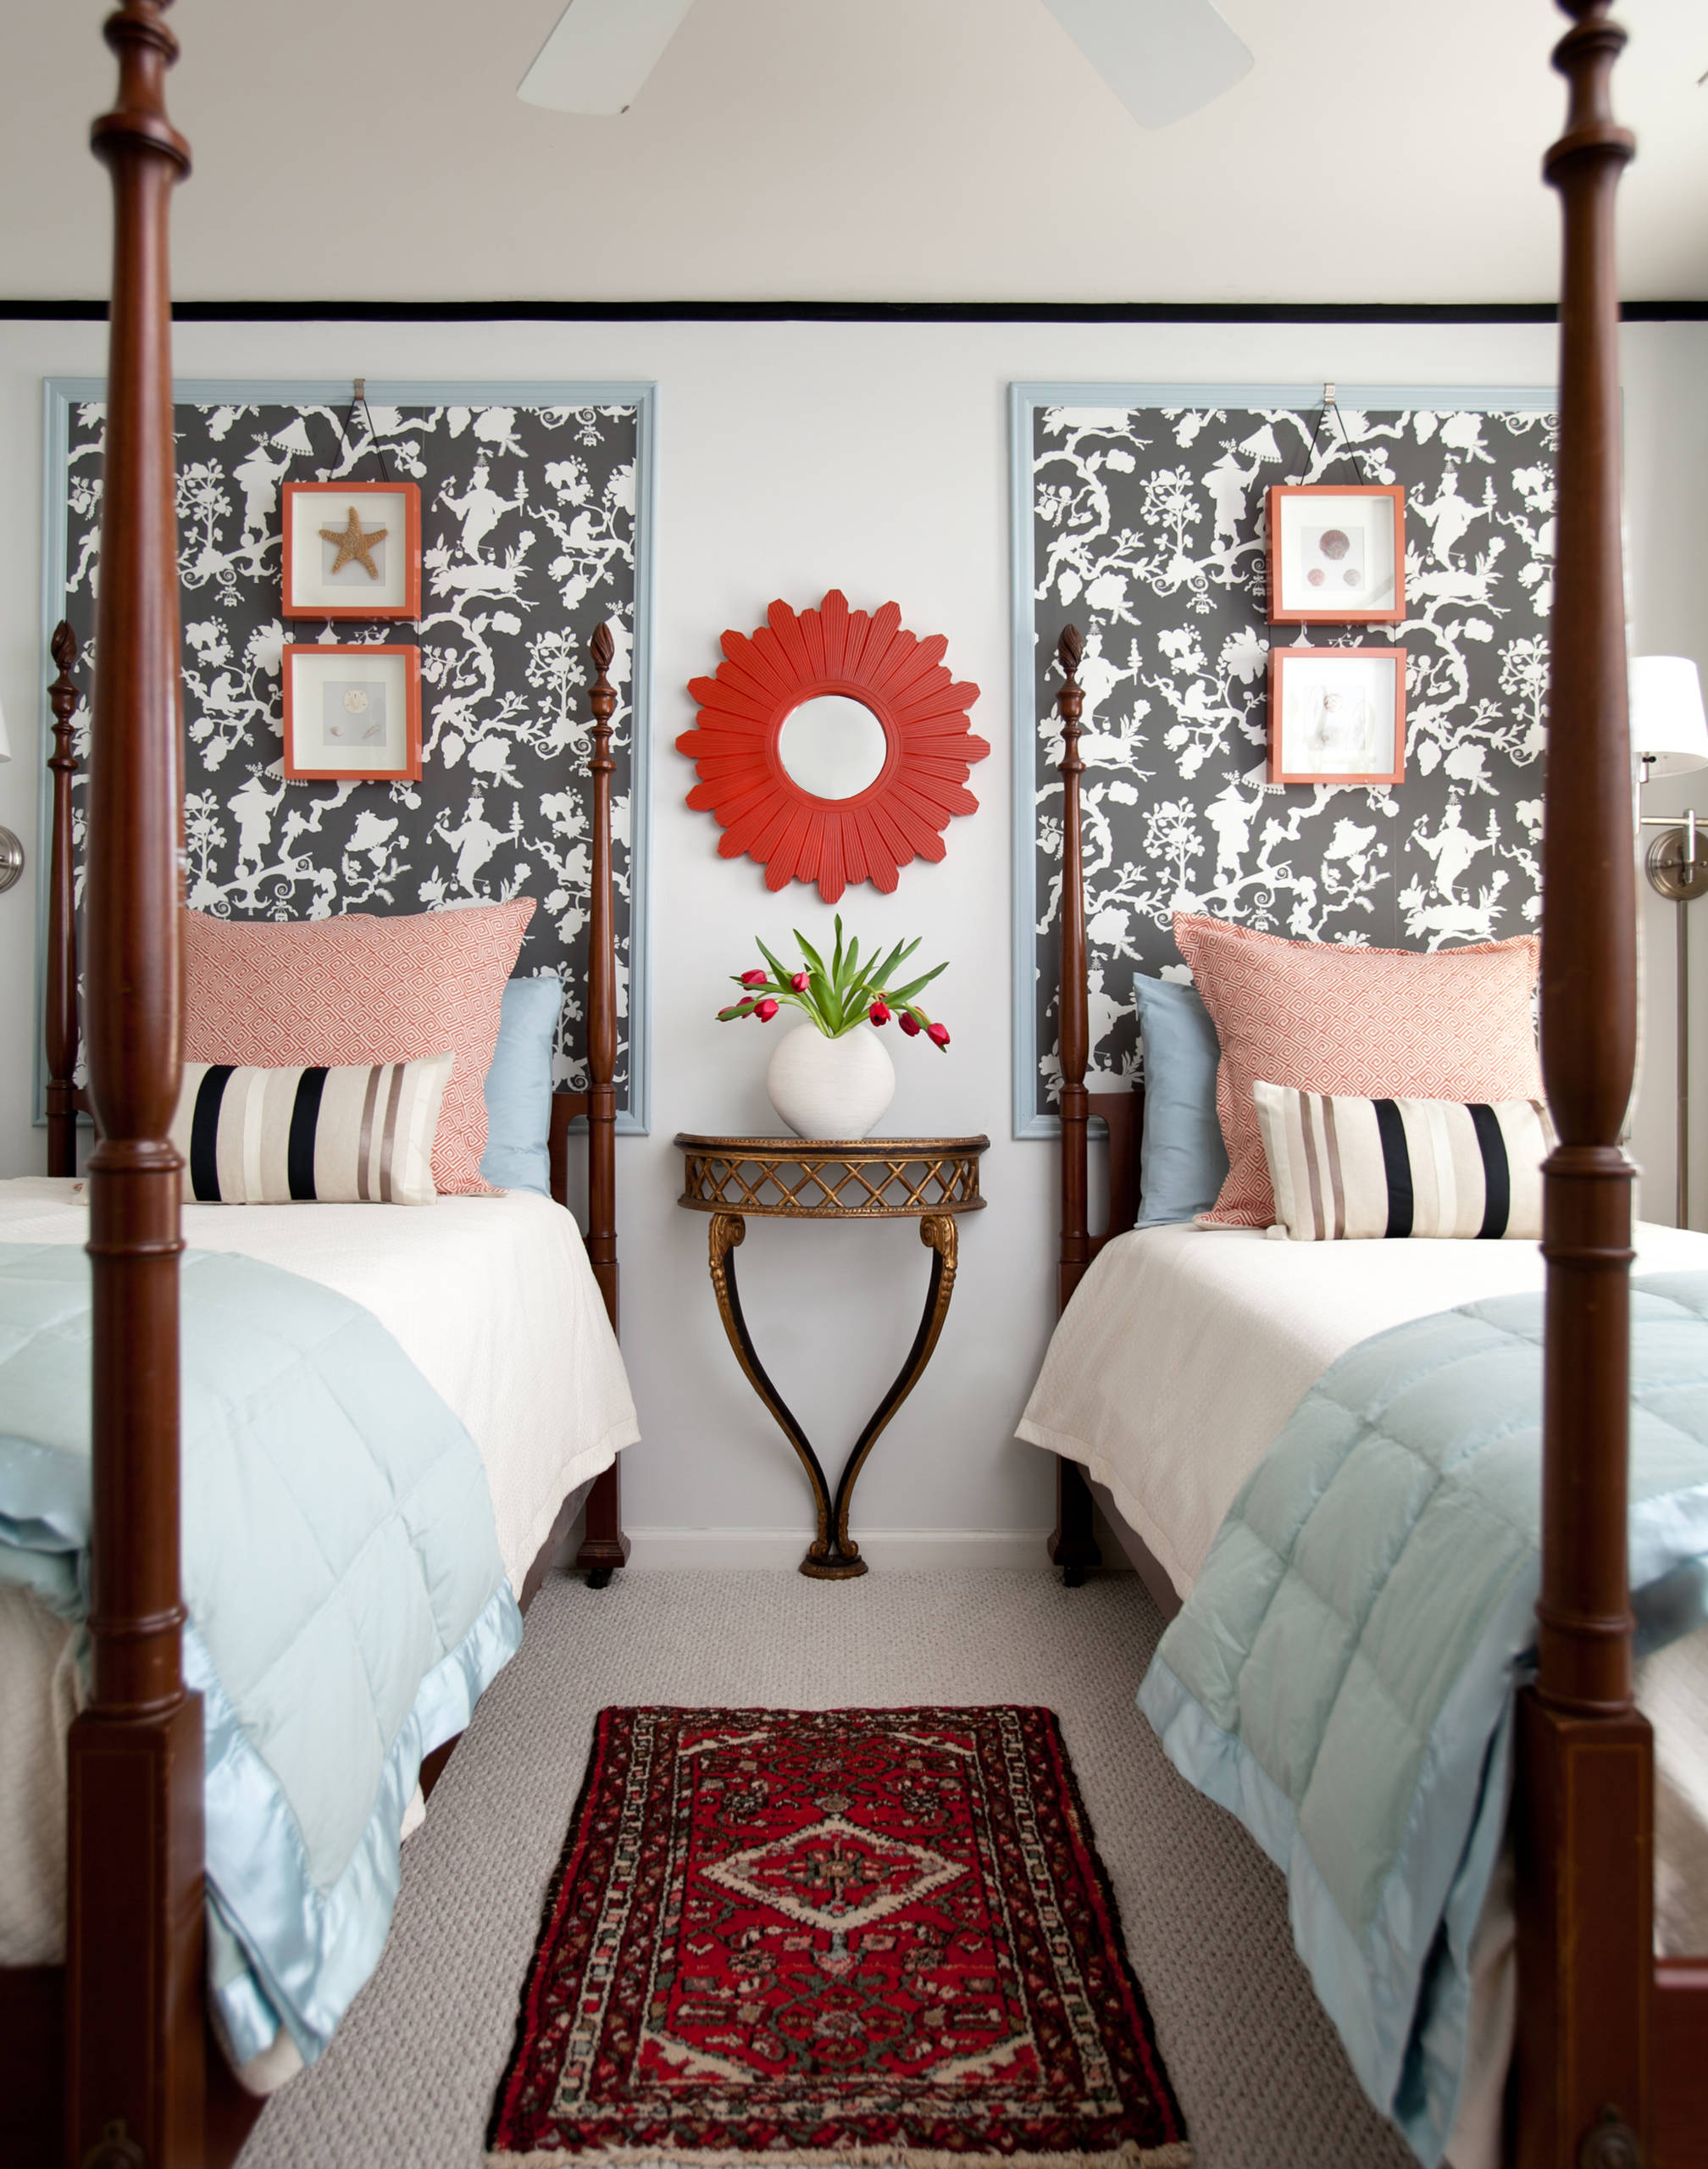 Wallpaper Behind Bed: Photos, Designs & Ideas